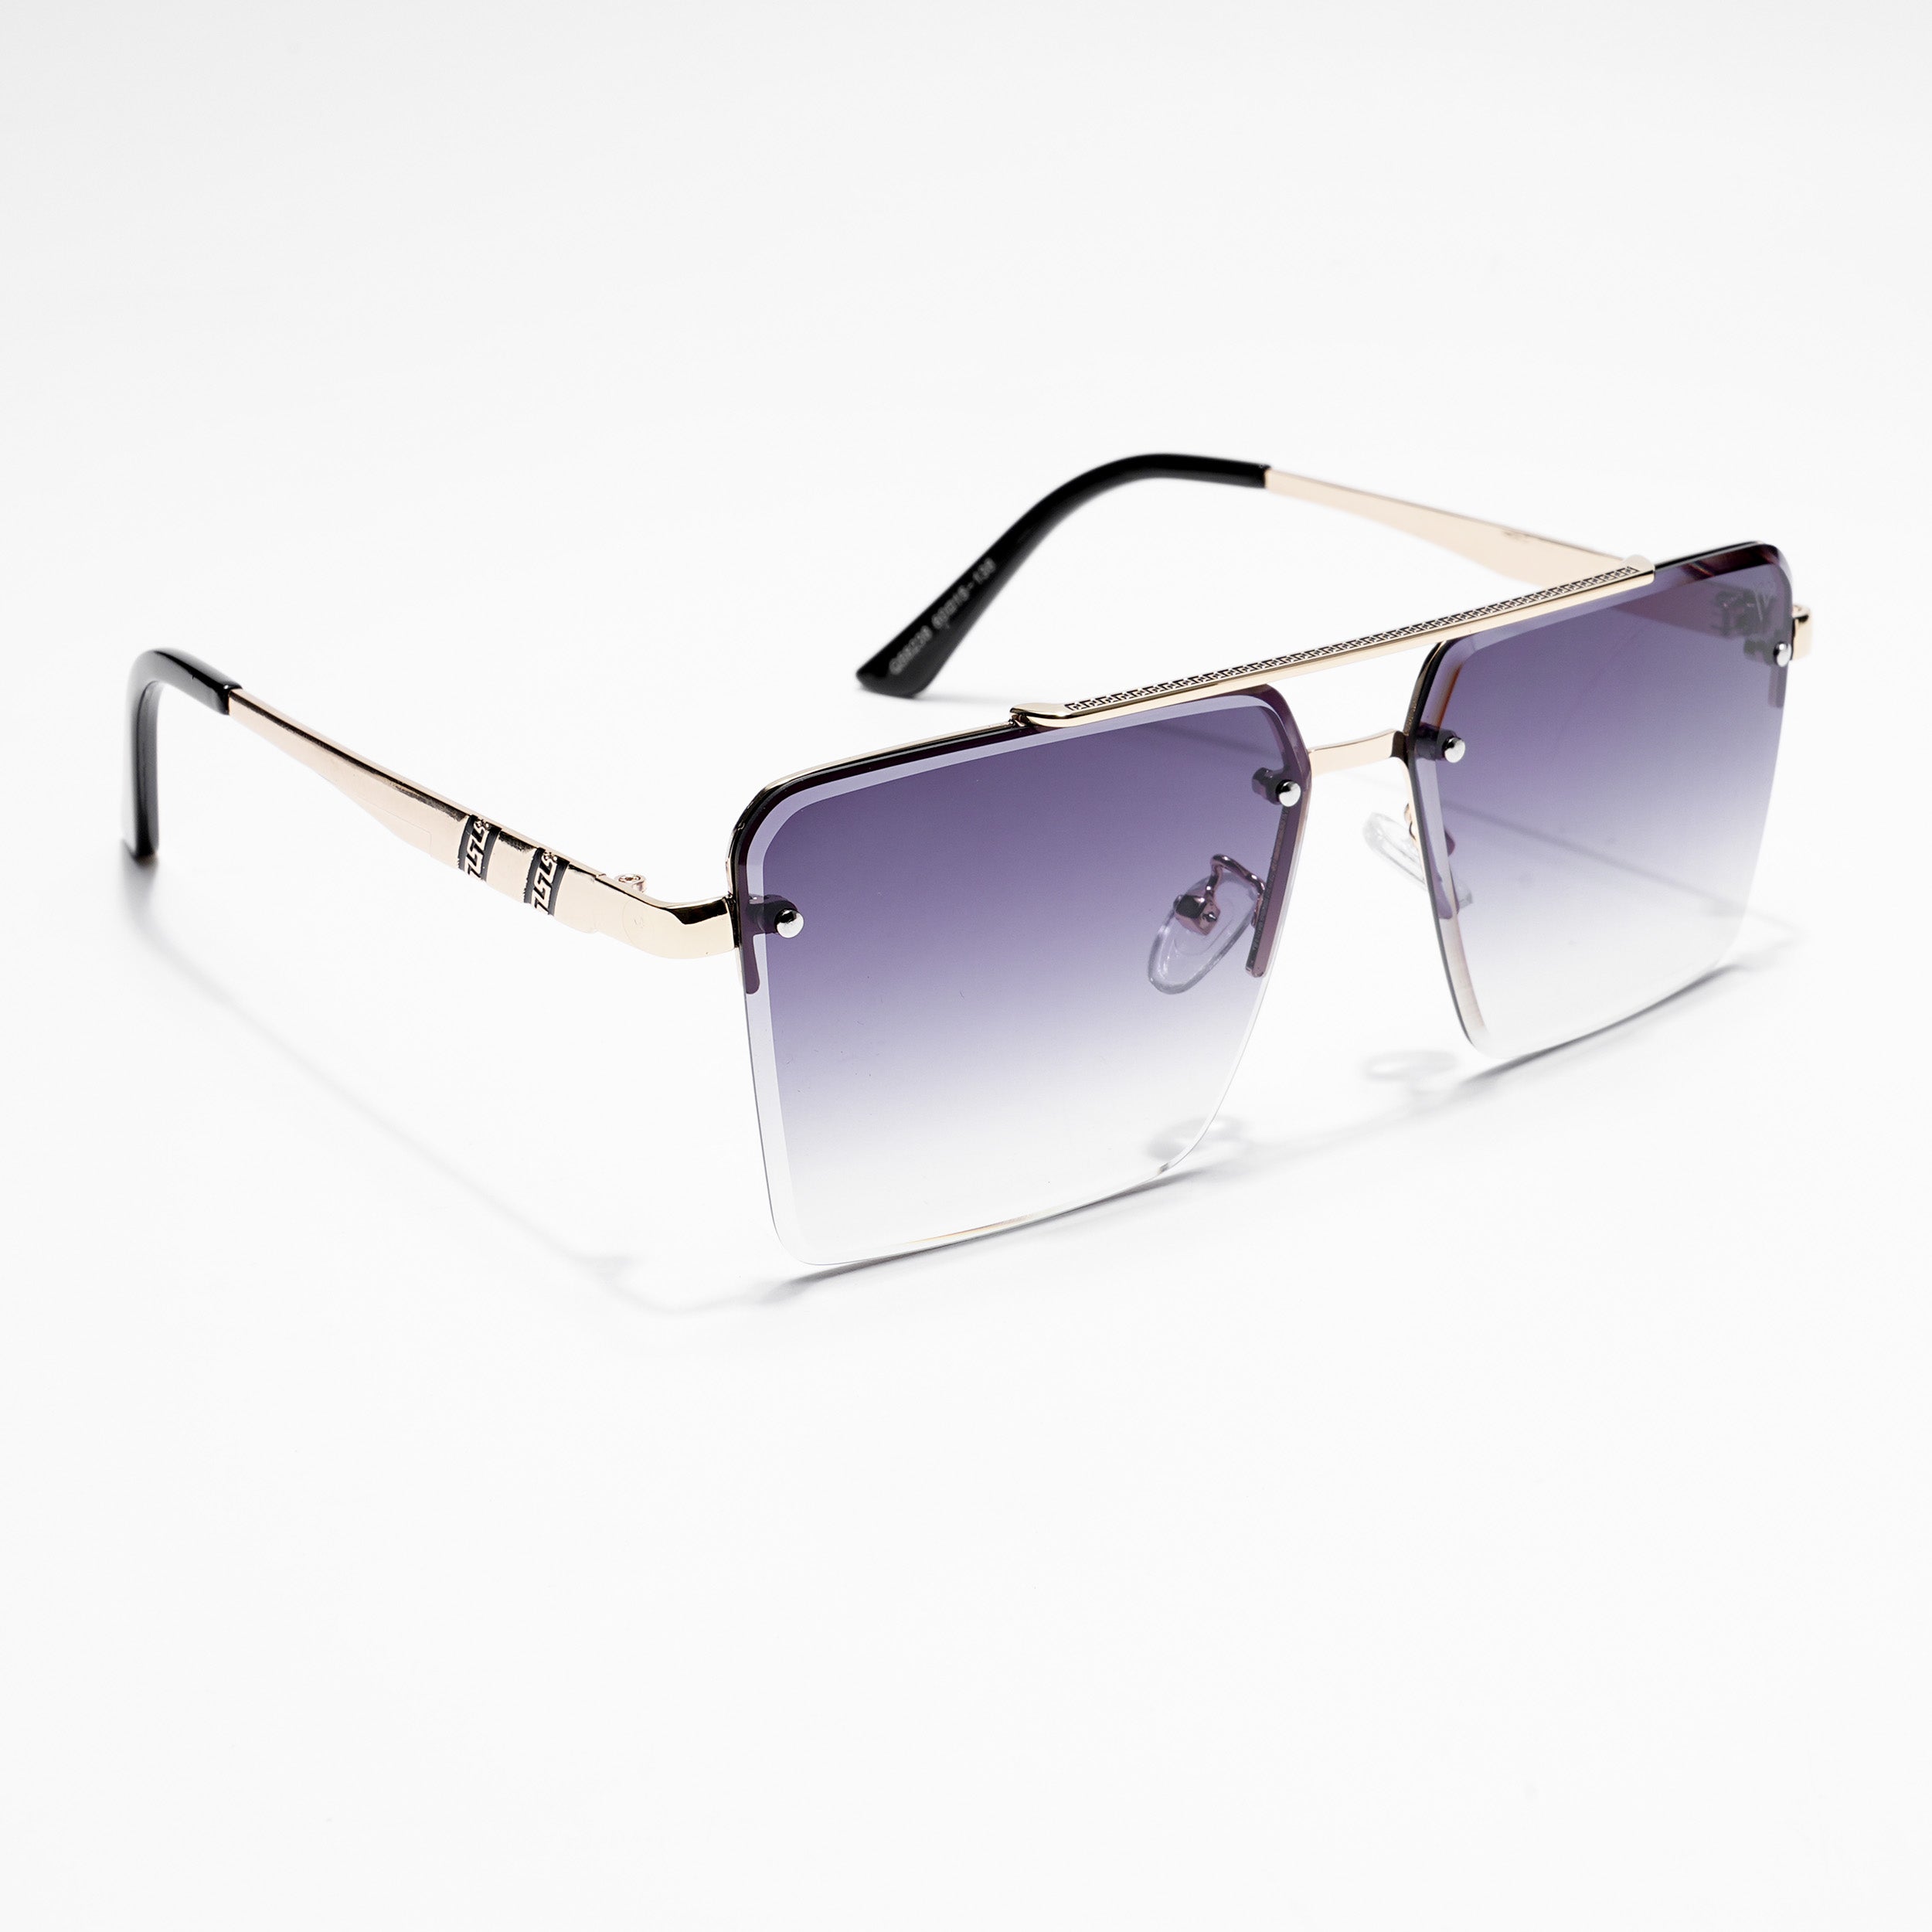 Voyage Grey & Clear Wayfarer Sunglasses for Men & Women (58238MG4160)